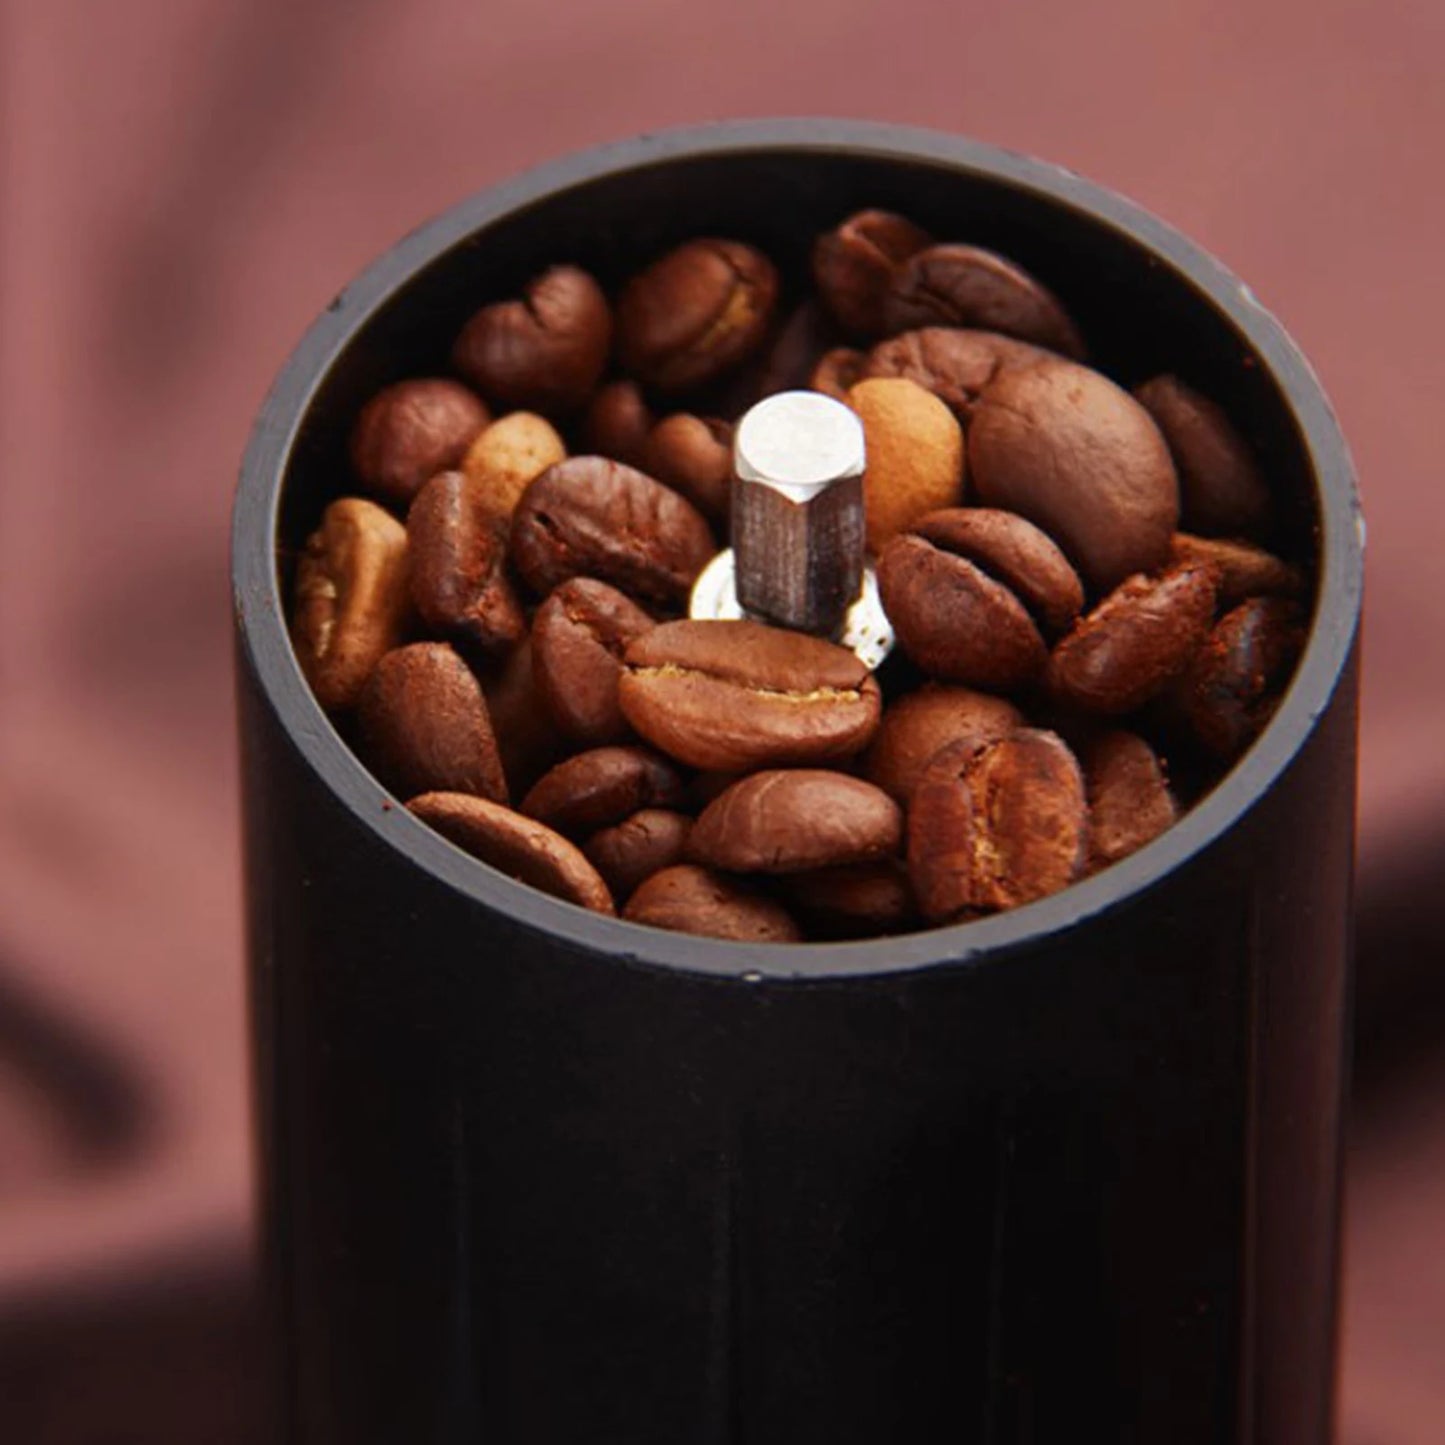 Mini Manual Coffee Bean Hand Grinder Machine Stainless Steel Burr Aeropress Drip Coffee Espresso French Press Turki Kitchen Tool LUXLIFE BRANDS